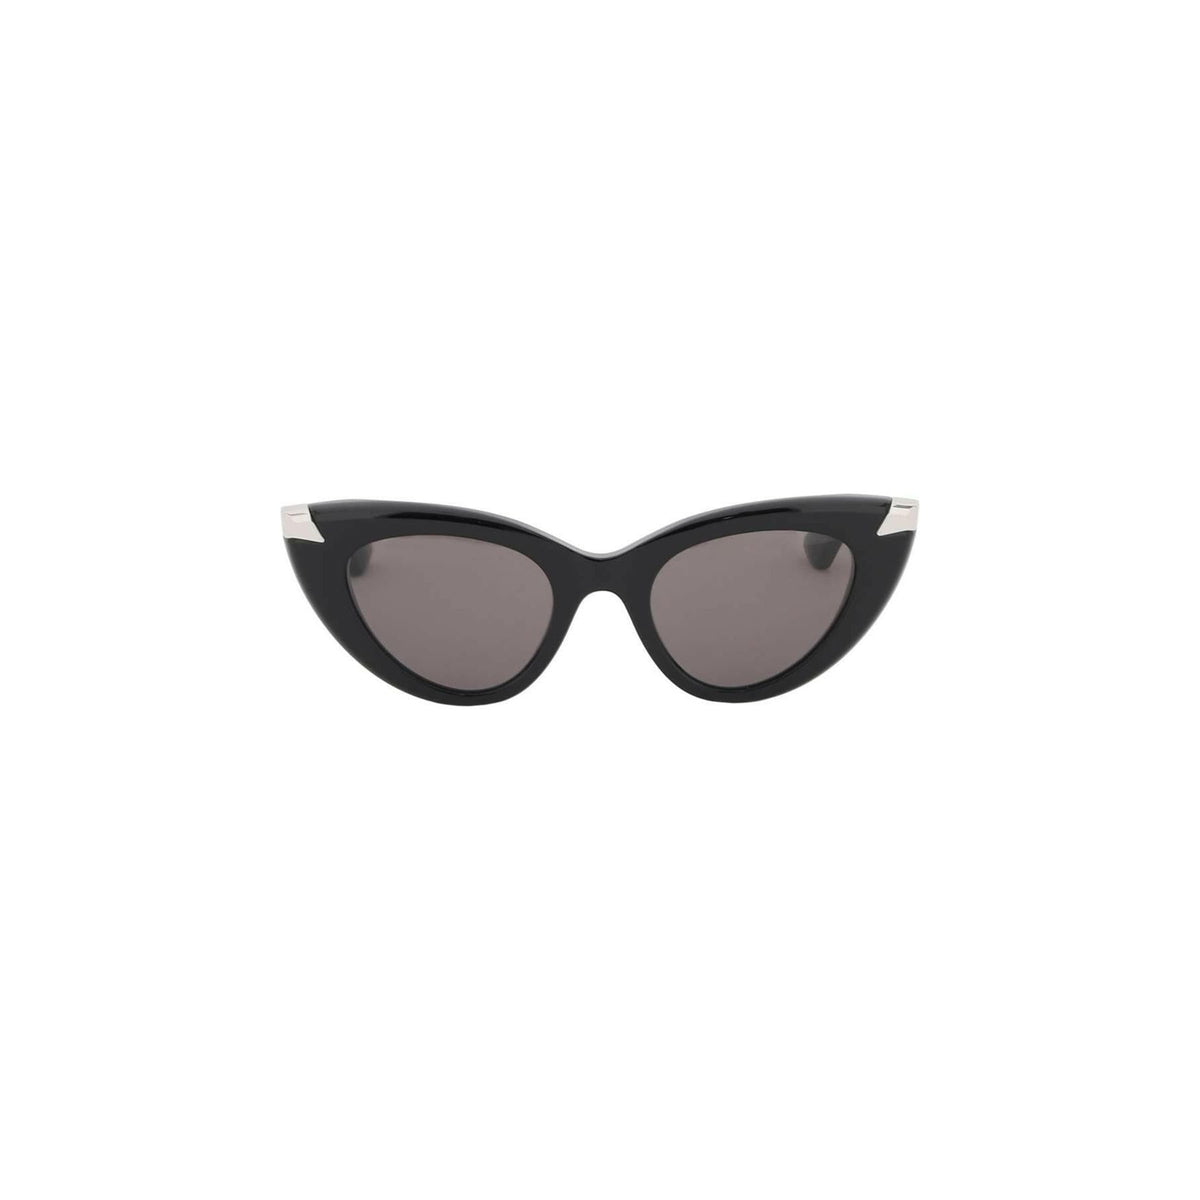 ALEXANDER MCQUEEN - Punk Rivet Cat-Eye Sunglasses in Black/Smoke - JOHN JULIA